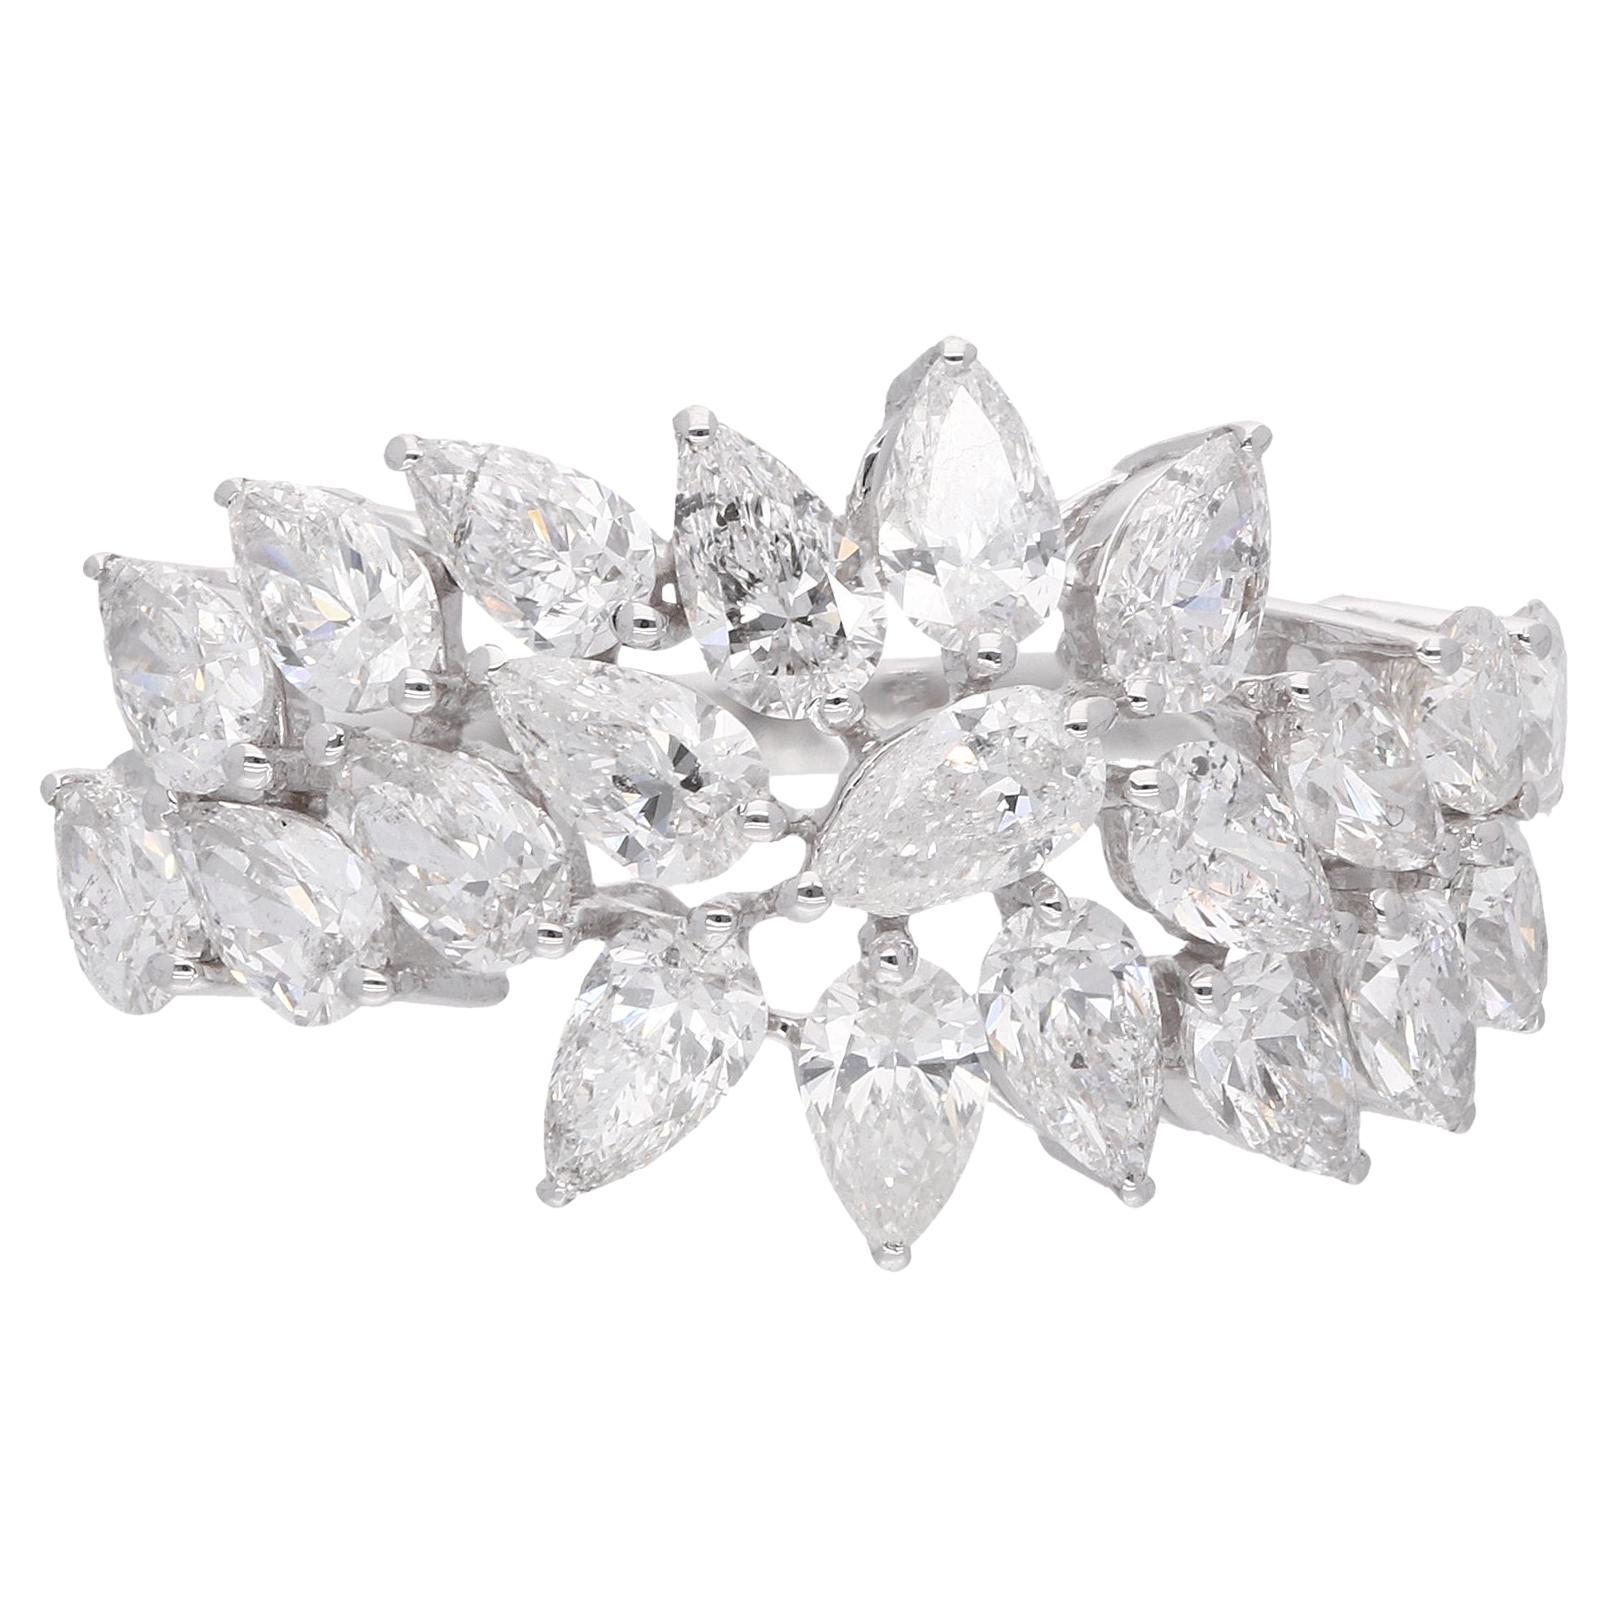 3 Carat SI Clarity HI Color Pear Shape Diamond Ring 18 Karat White Gold Jewelry